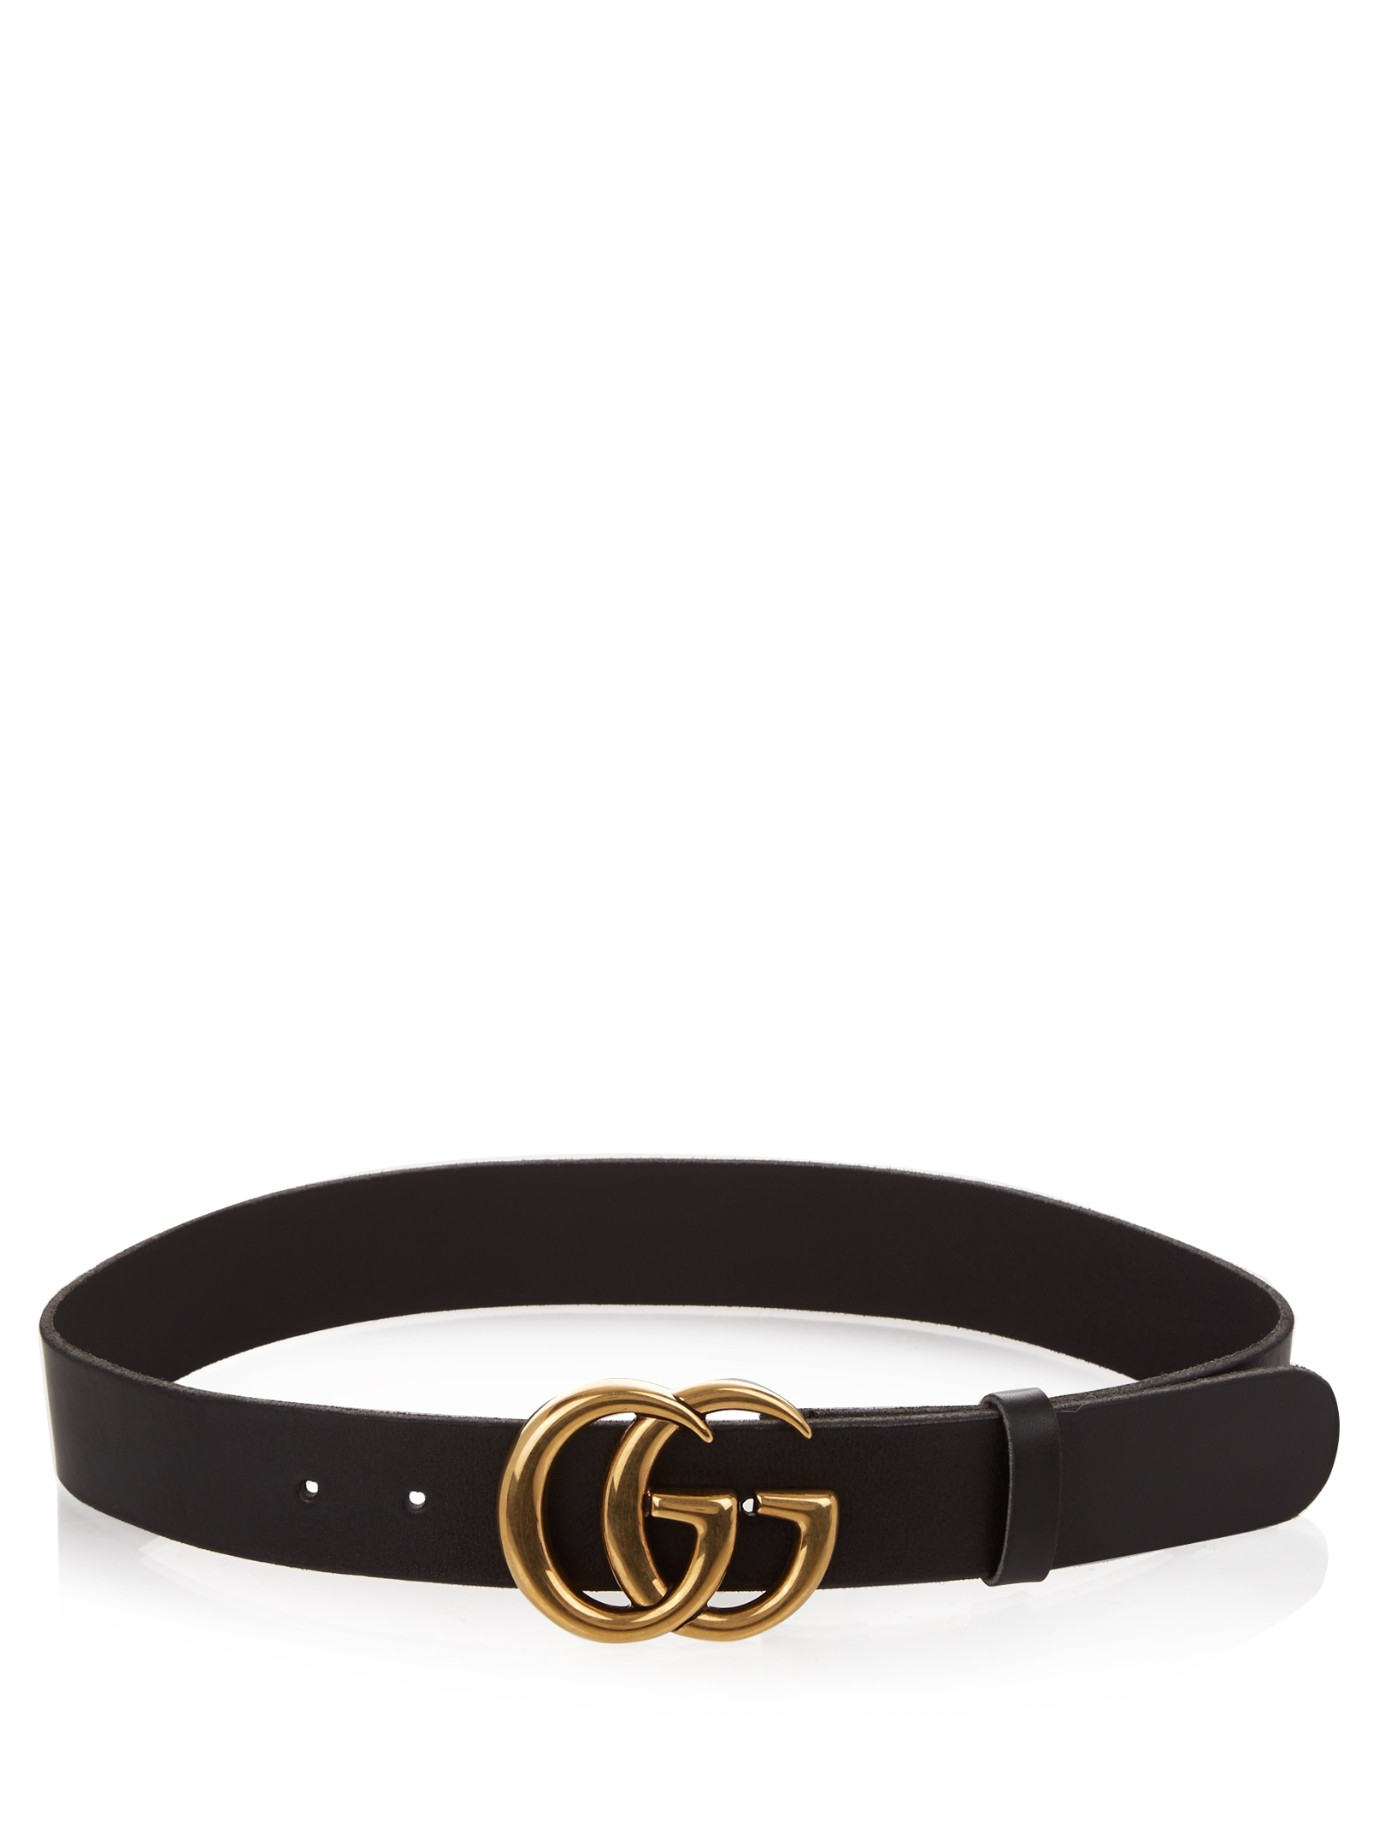 Gucci Gg-logo Leather Belt in Black - Lyst